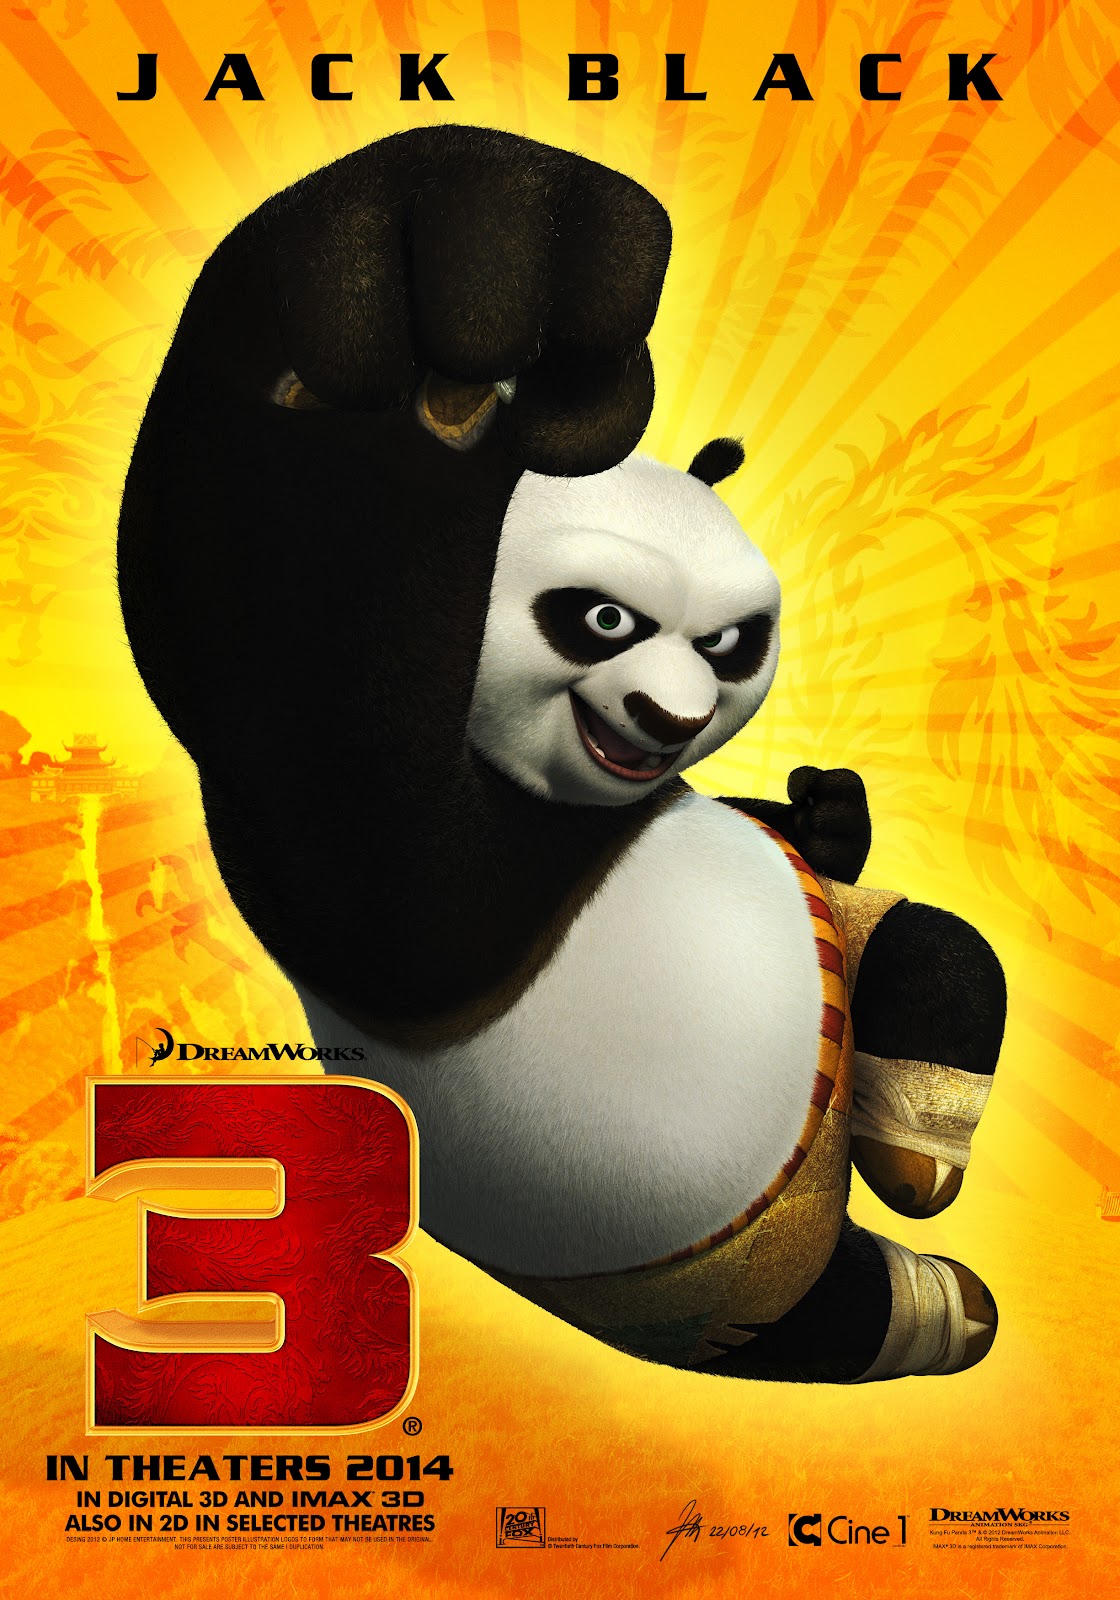 kung fu panda 3 in hindi full movie download